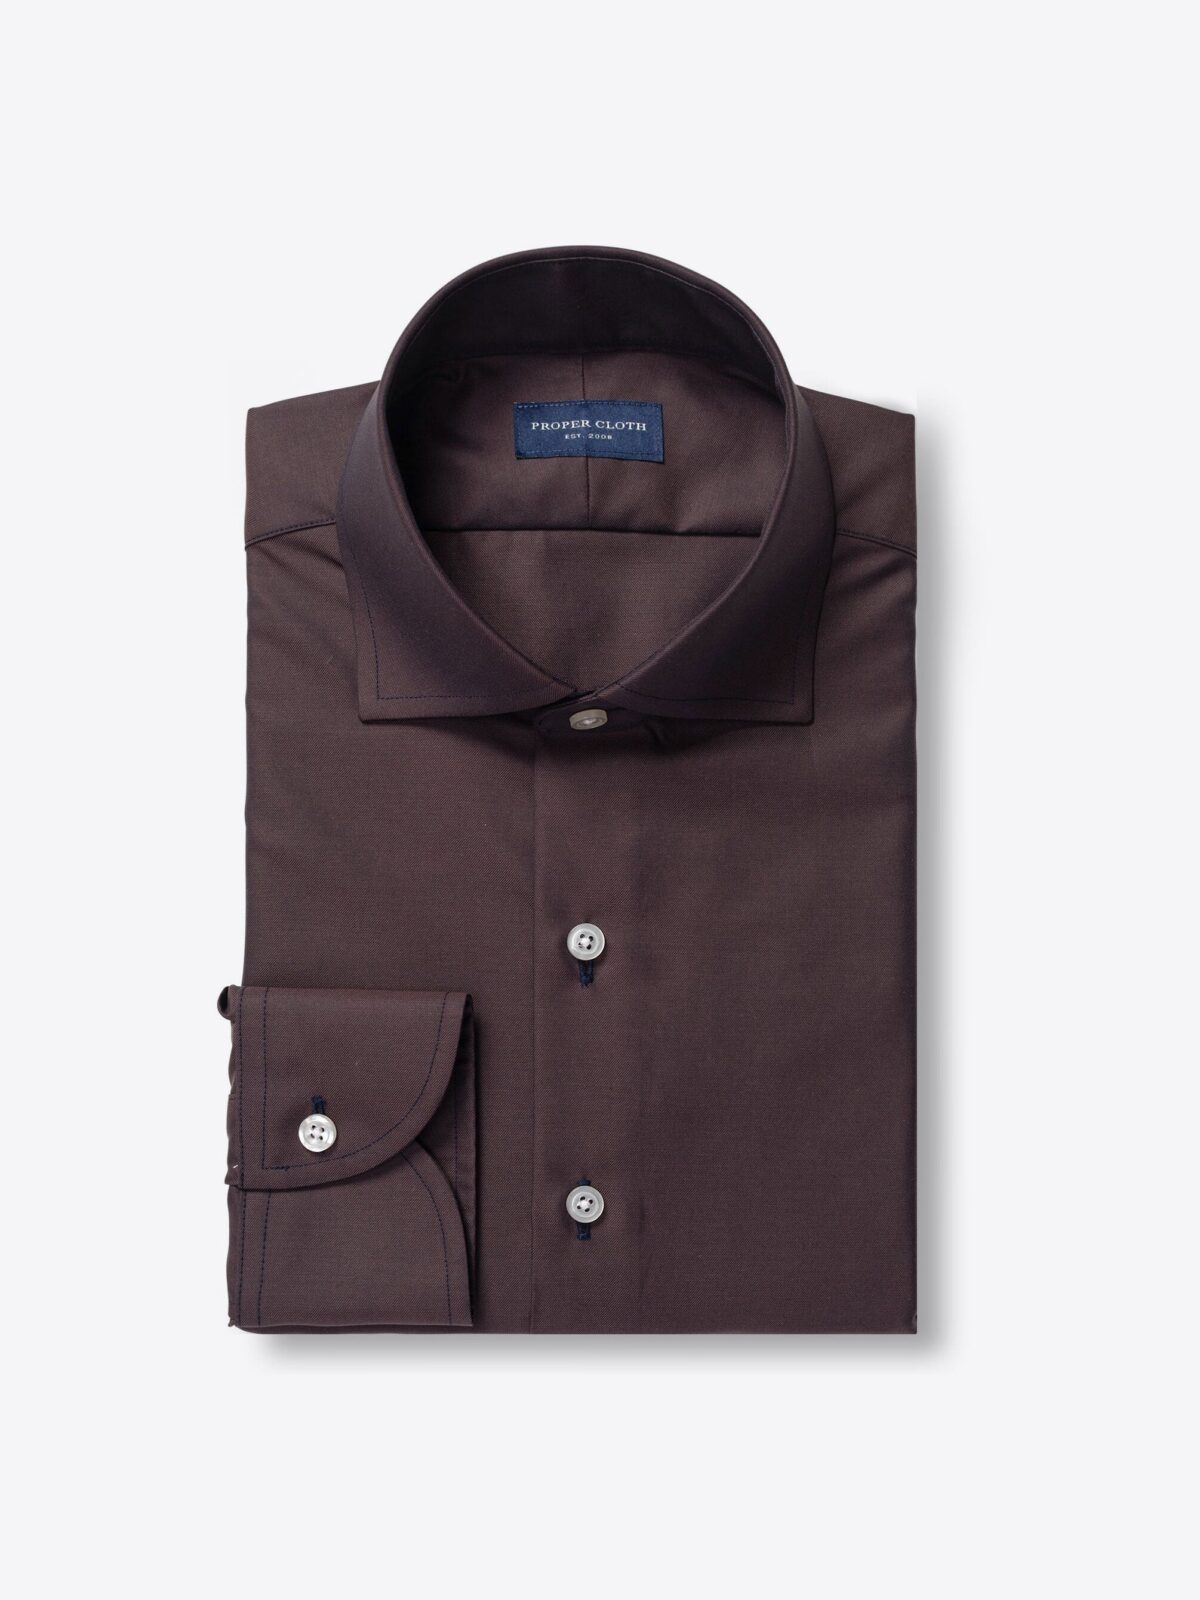 Greenwich Dark Brown Twill Shirt by Proper Cloth